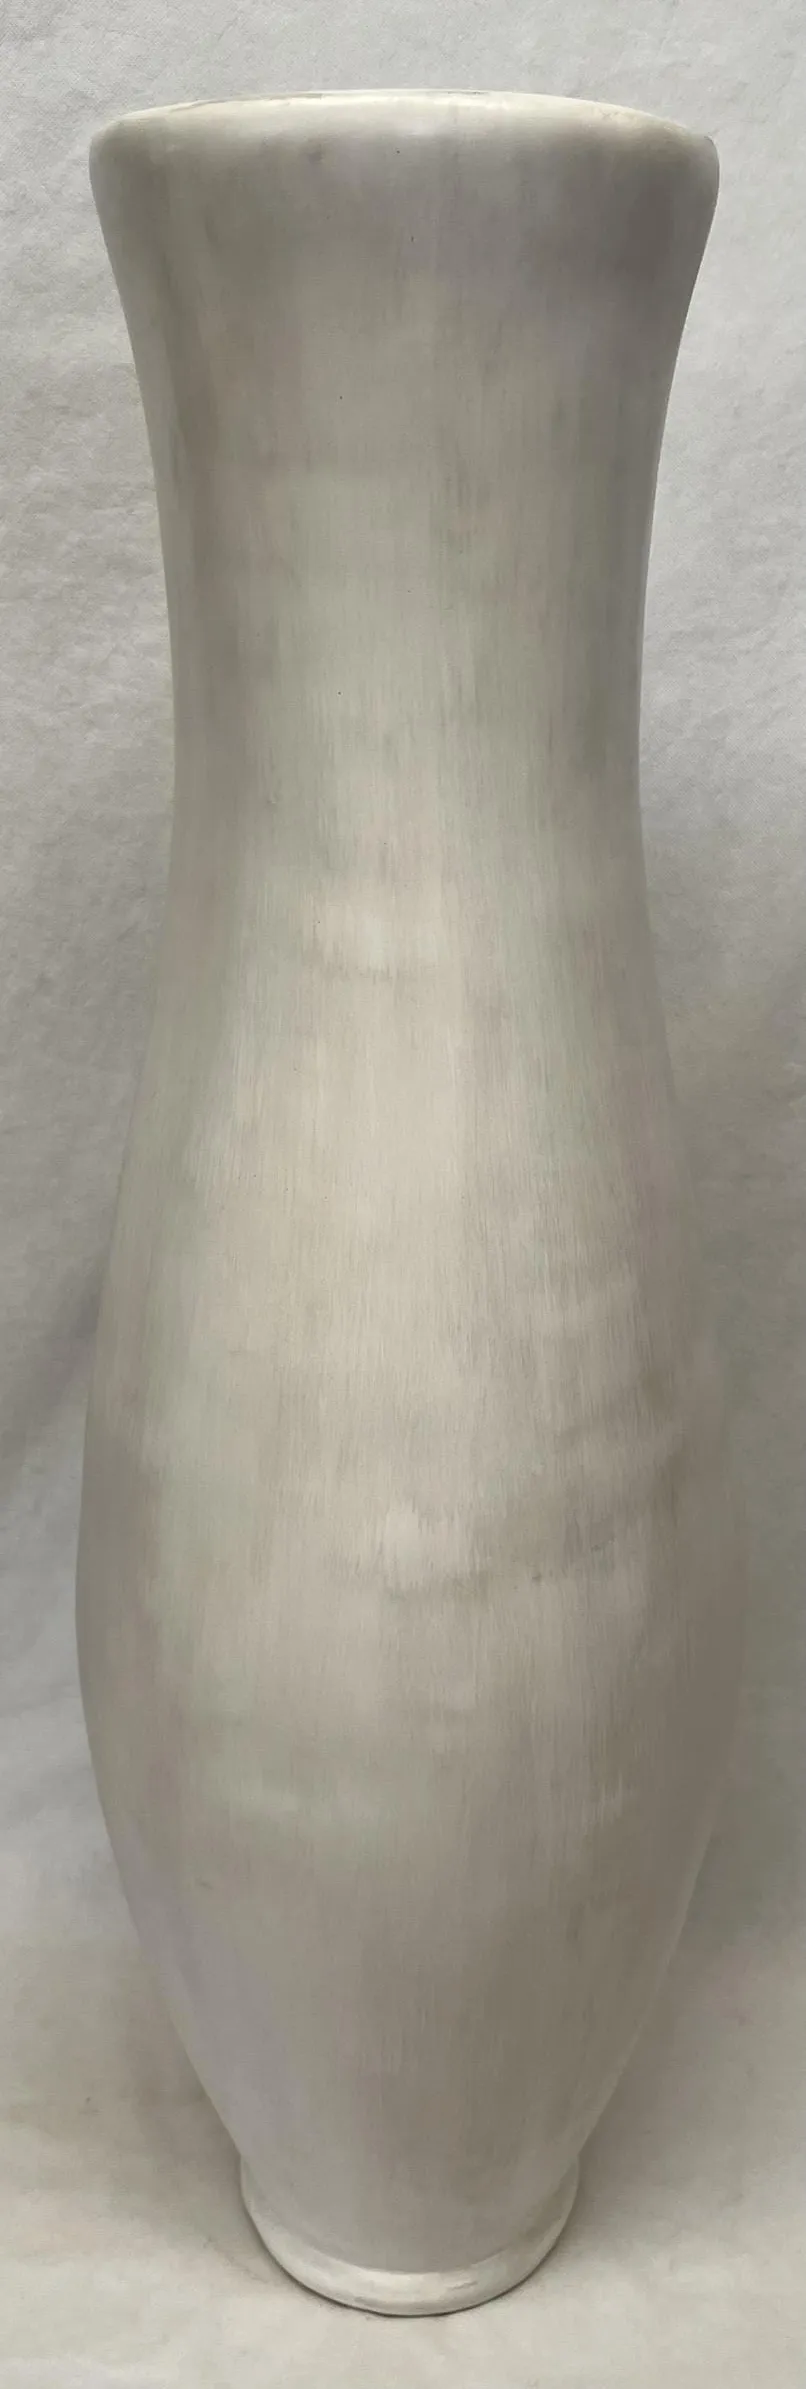 Medium White Polished Ceramic Floor Vase 13"W X 40"H